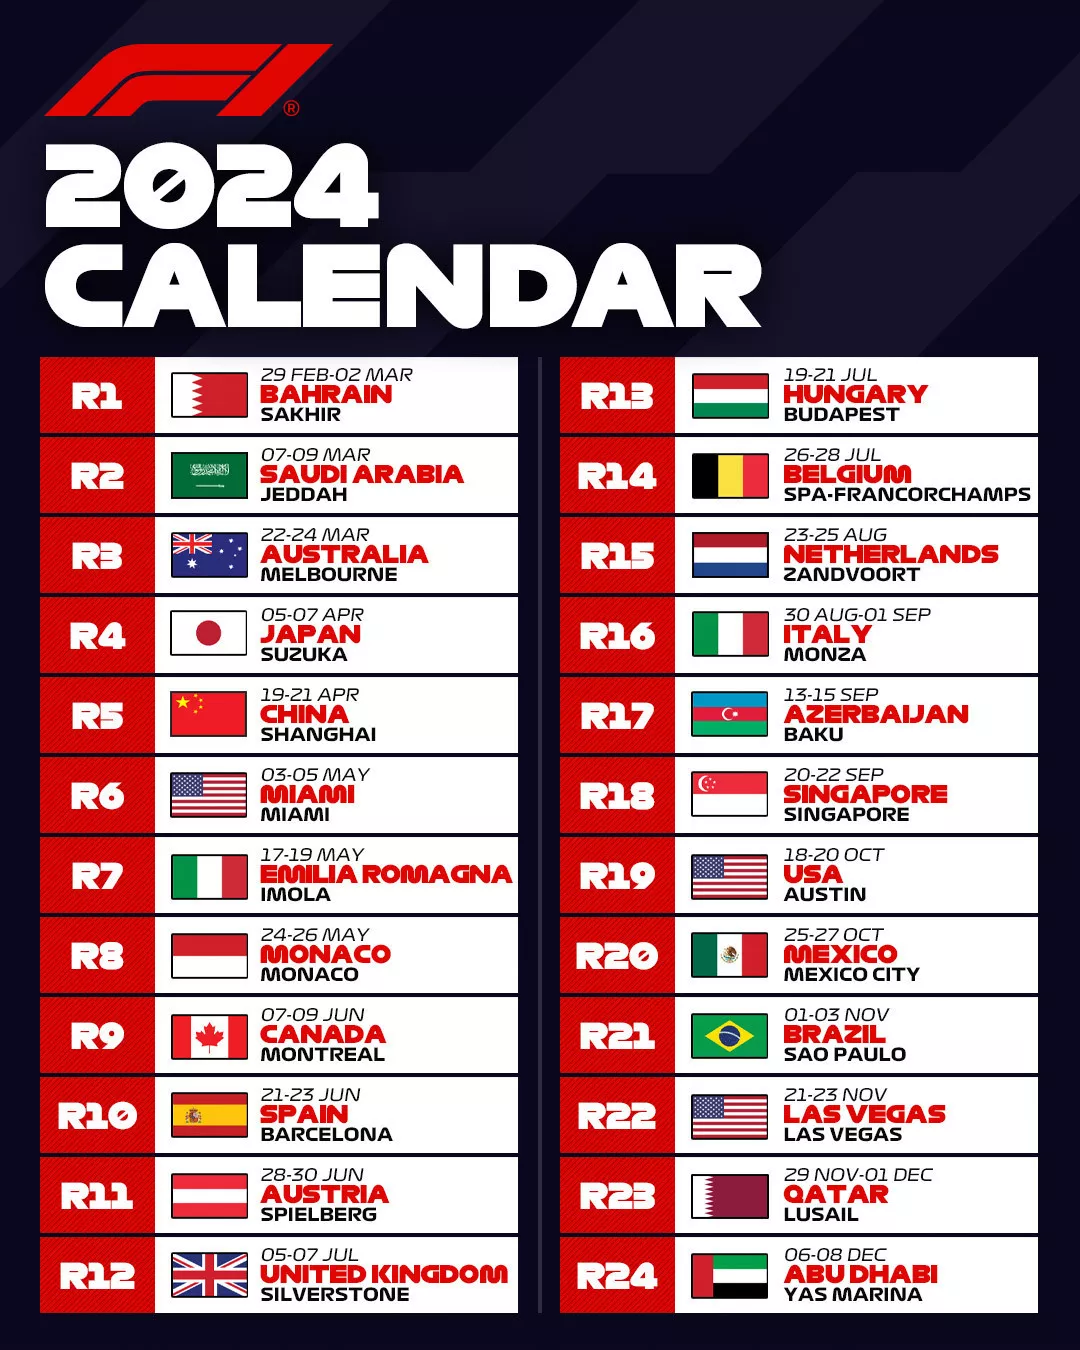 There is already a calendar for the 2024 Formula 1 season